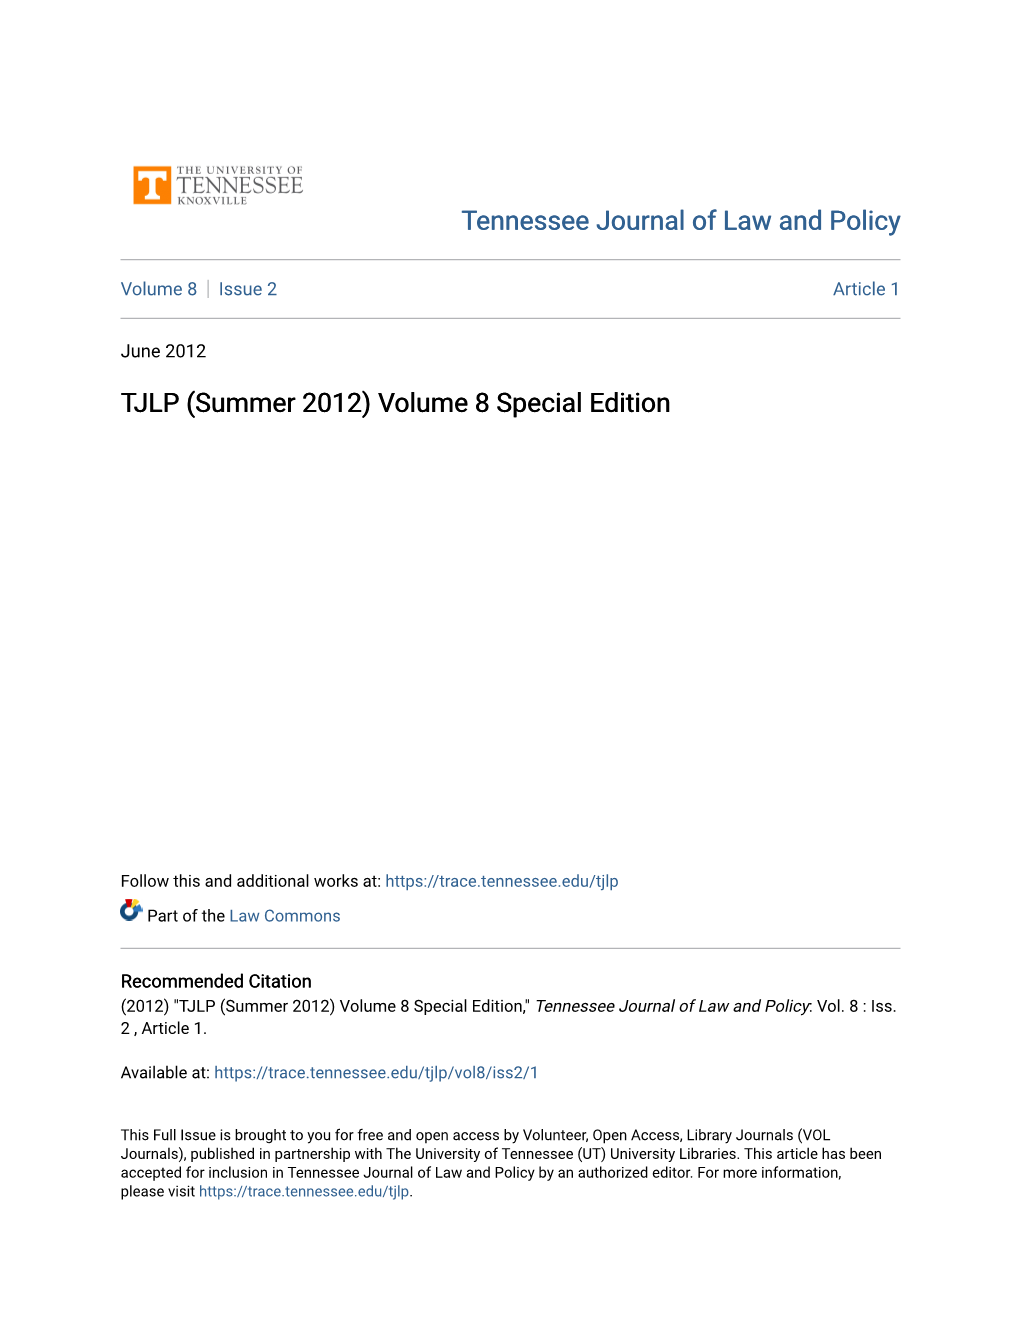 TJLP (Summer 2012) Volume 8 Special Edition